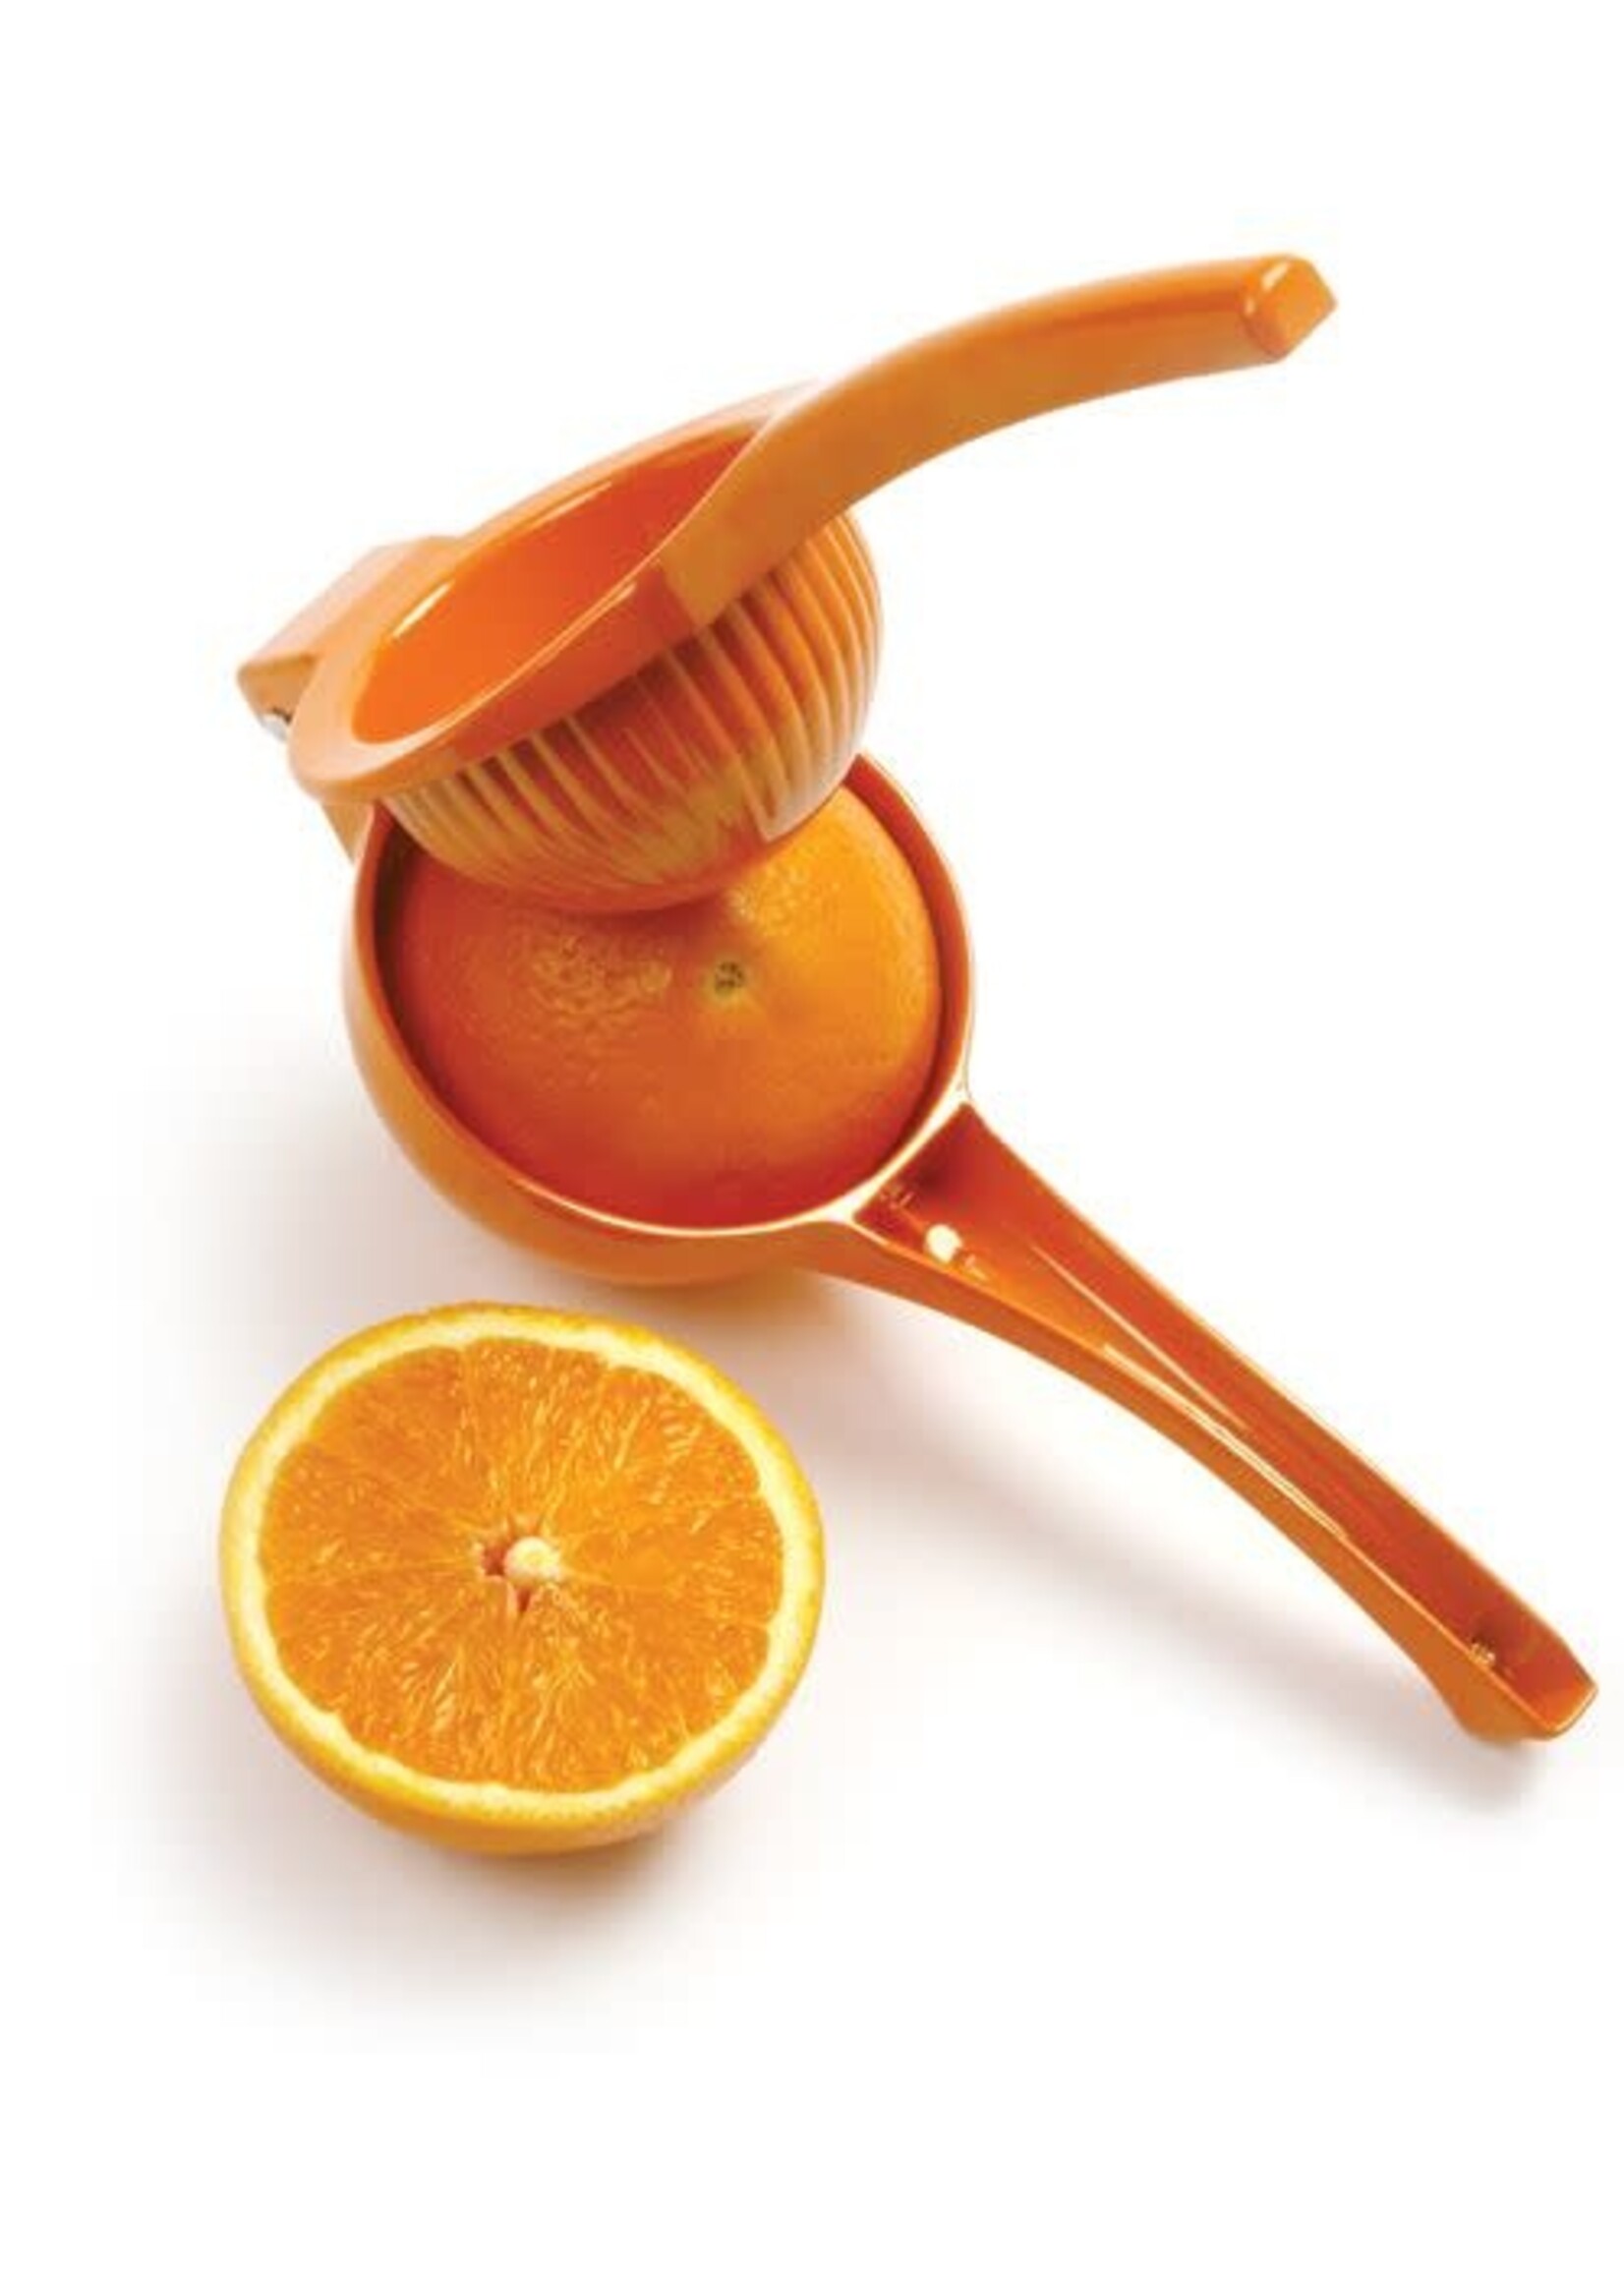 Norpro Orange Juicer by Norpro